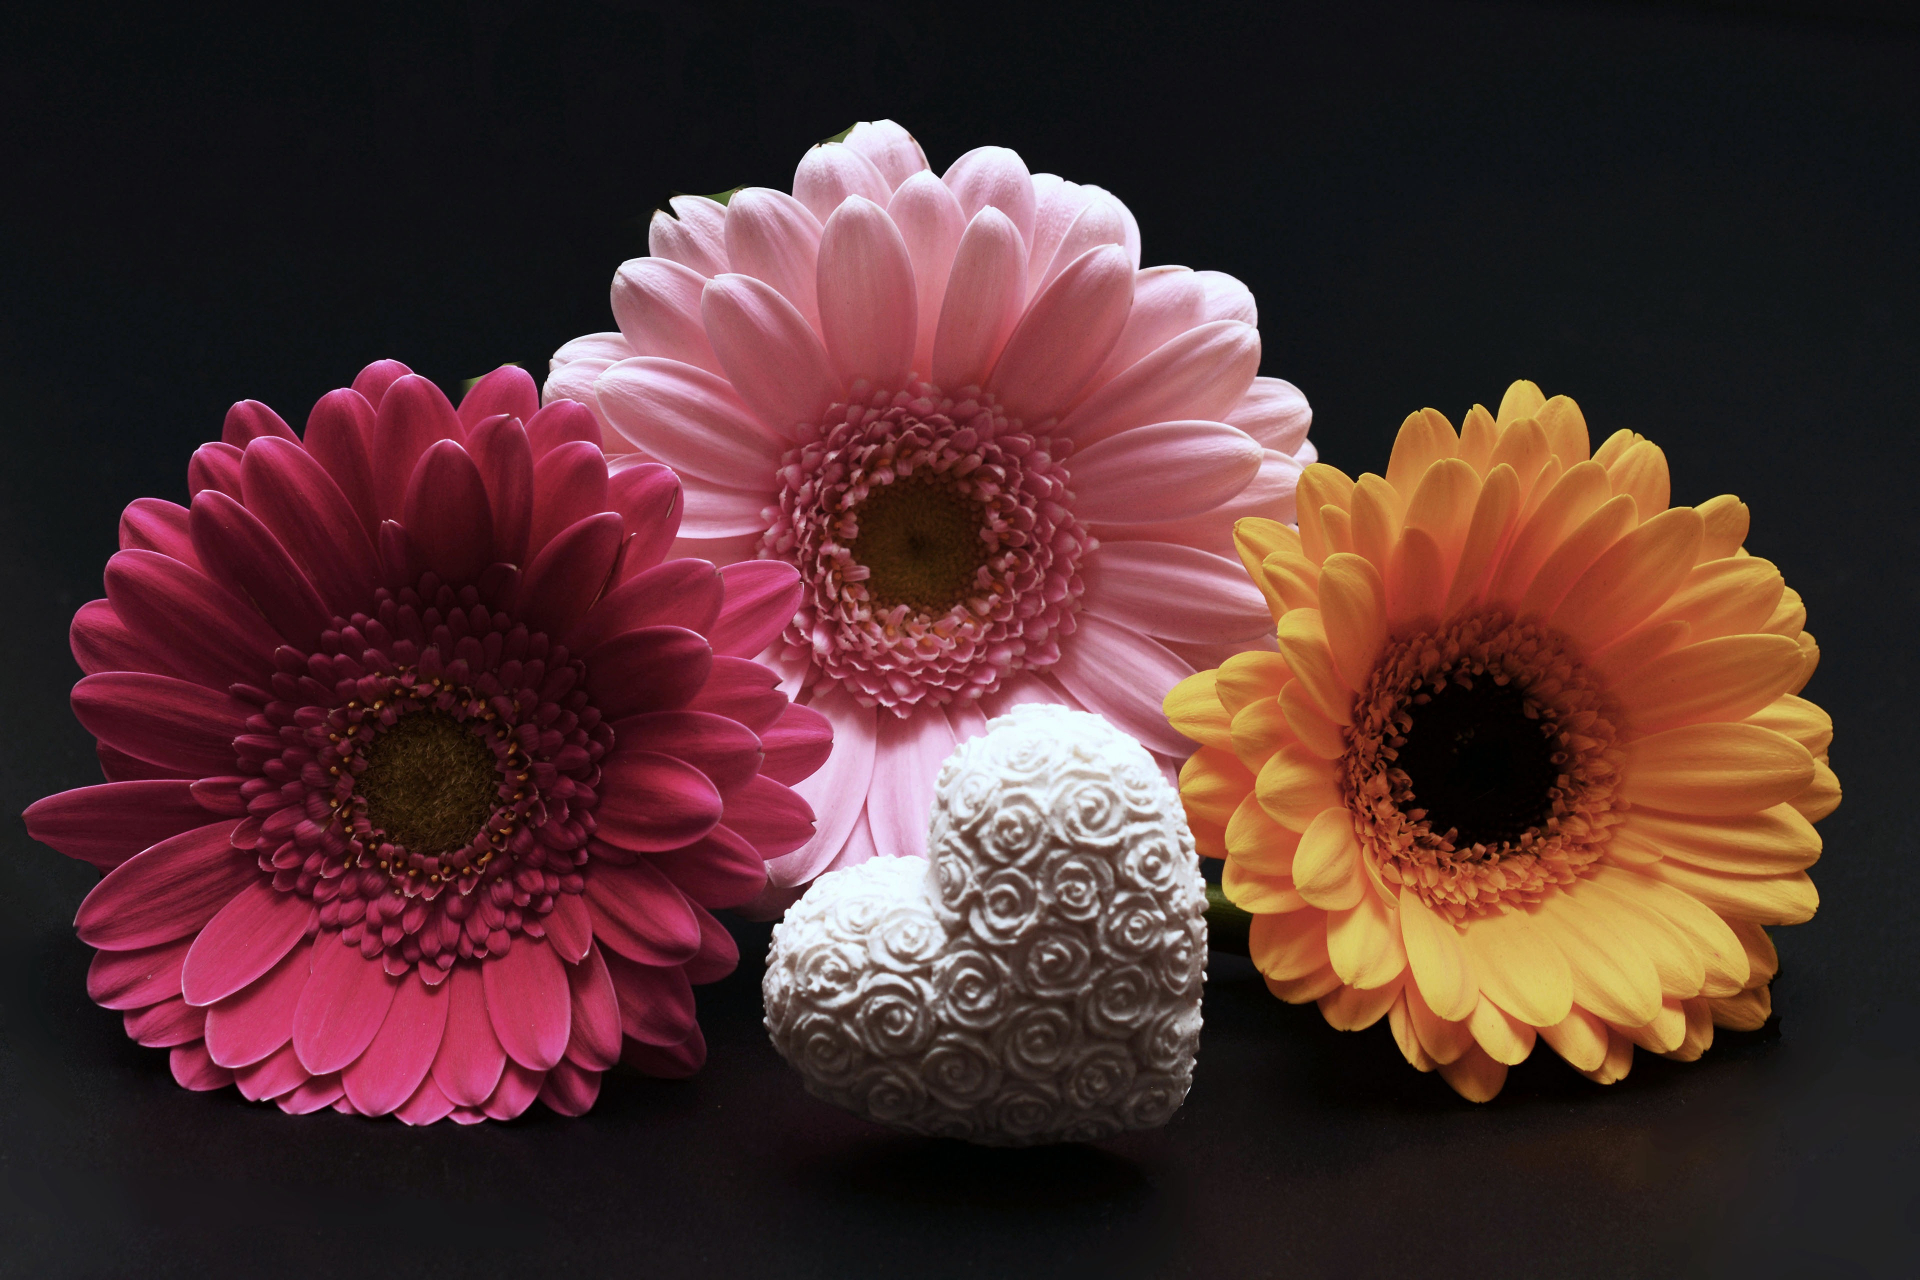 Handy-Wallpaper Blumen, Gerbera, Blume, Bunt, Herz, Gelbe Blume, Erde/natur, Pinke Blume kostenlos herunterladen.